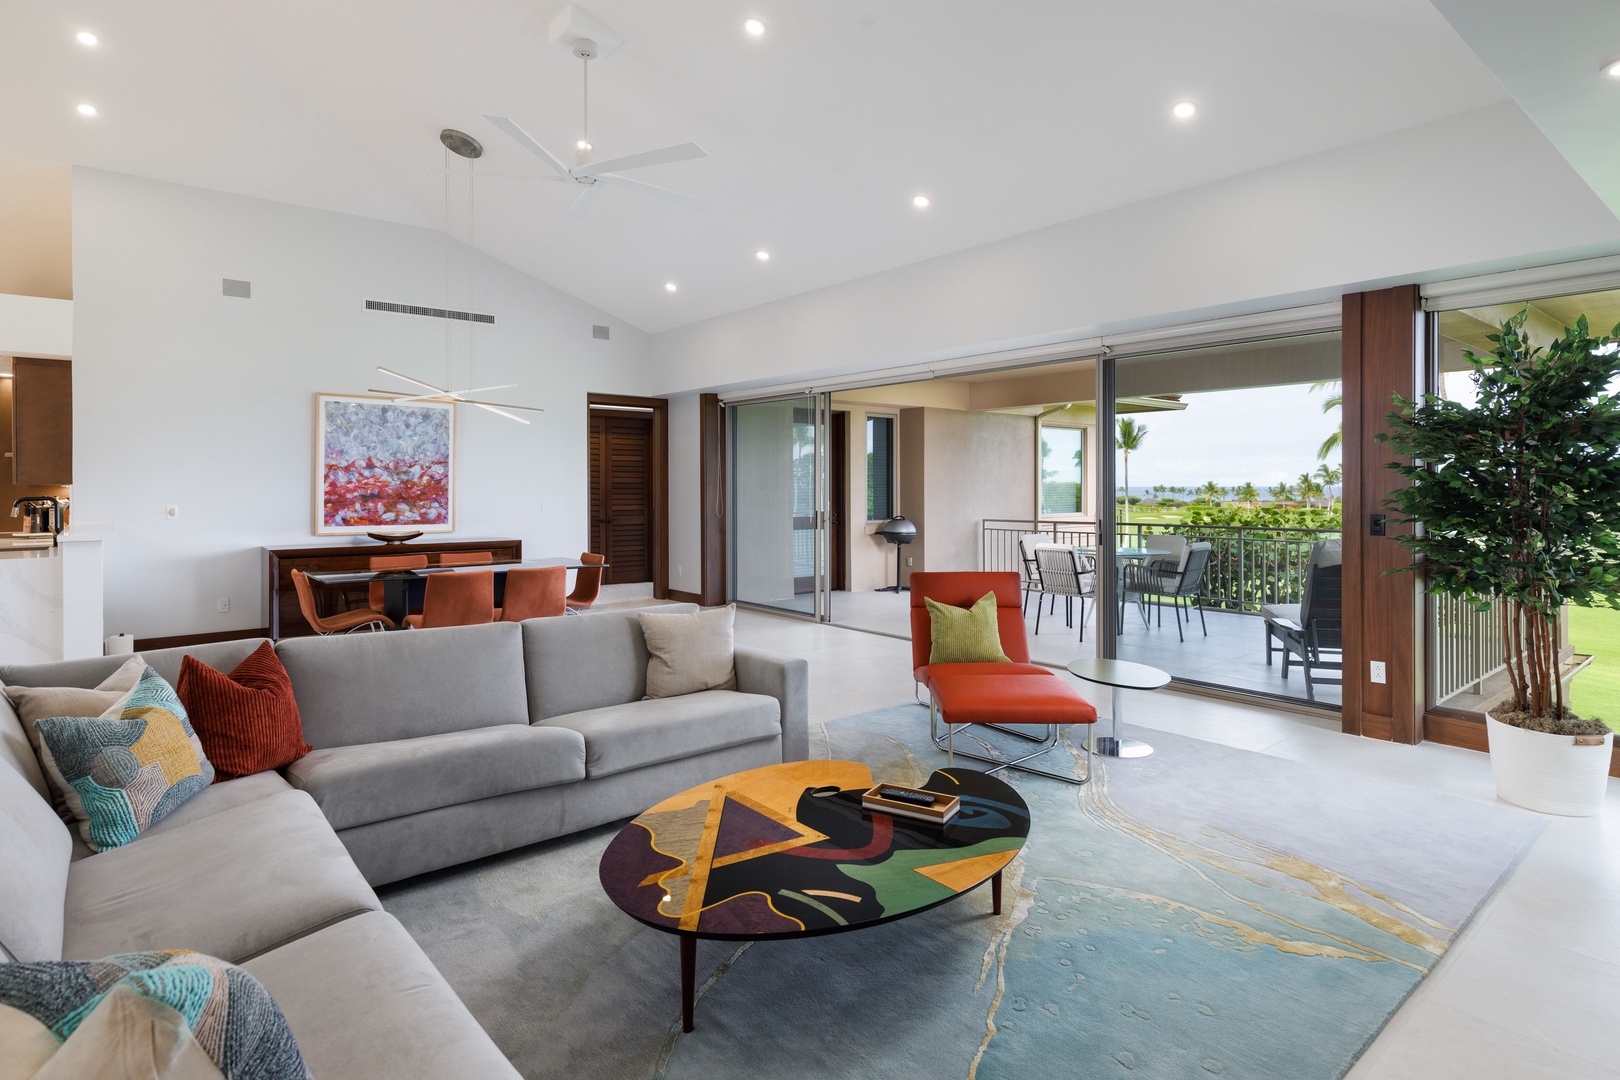 Kailua Kona Vacation Rentals, 3BD Fairways Villa (104A) at Four Seasons Resort at Hualalai - The living area has sectional sofas and direct access to lanai.